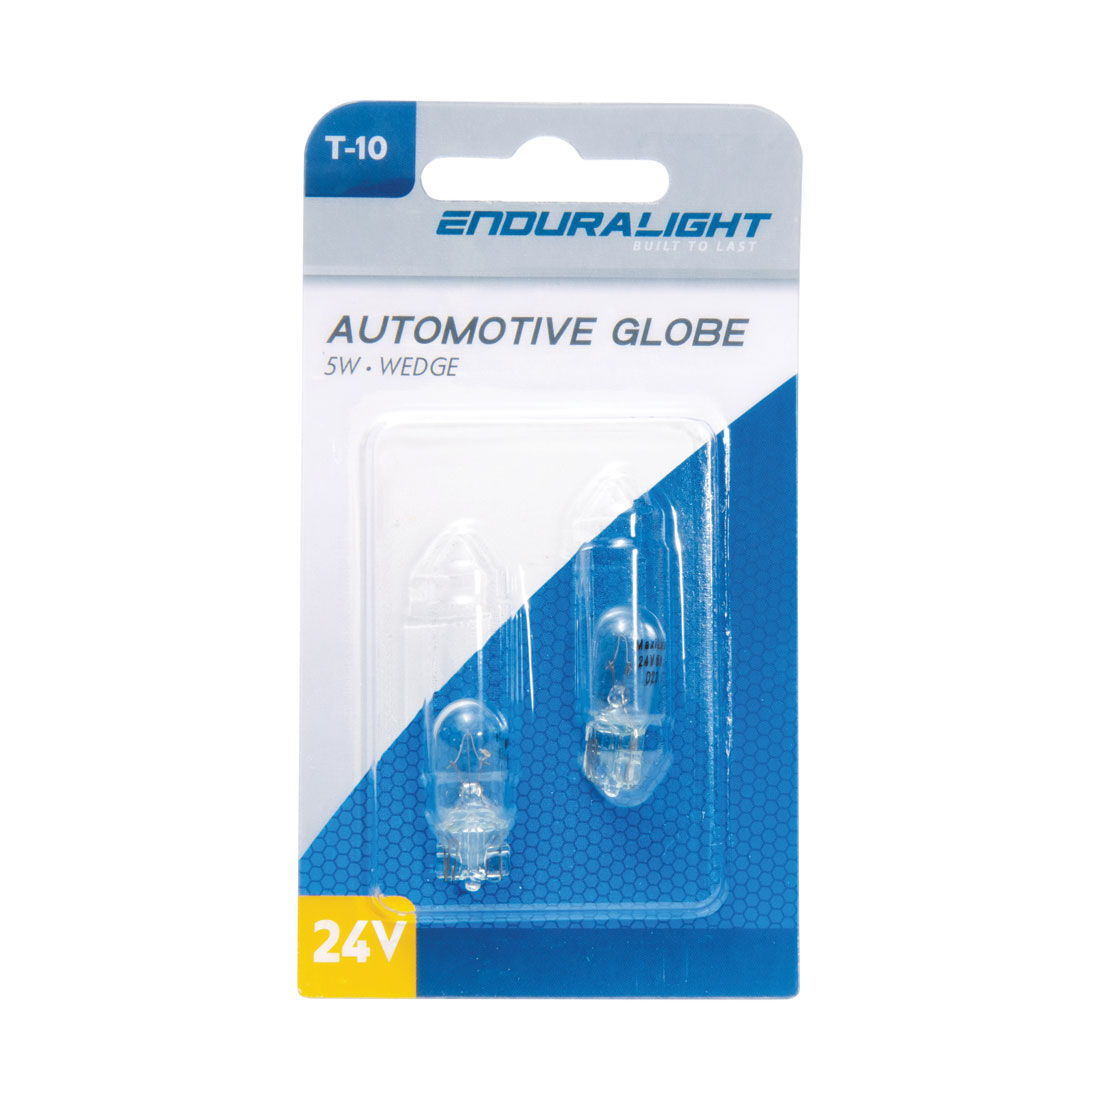 ENDURALIGHT Automotive Globes - Wedge 24V, 5W, T-10, , scaau_hi-res